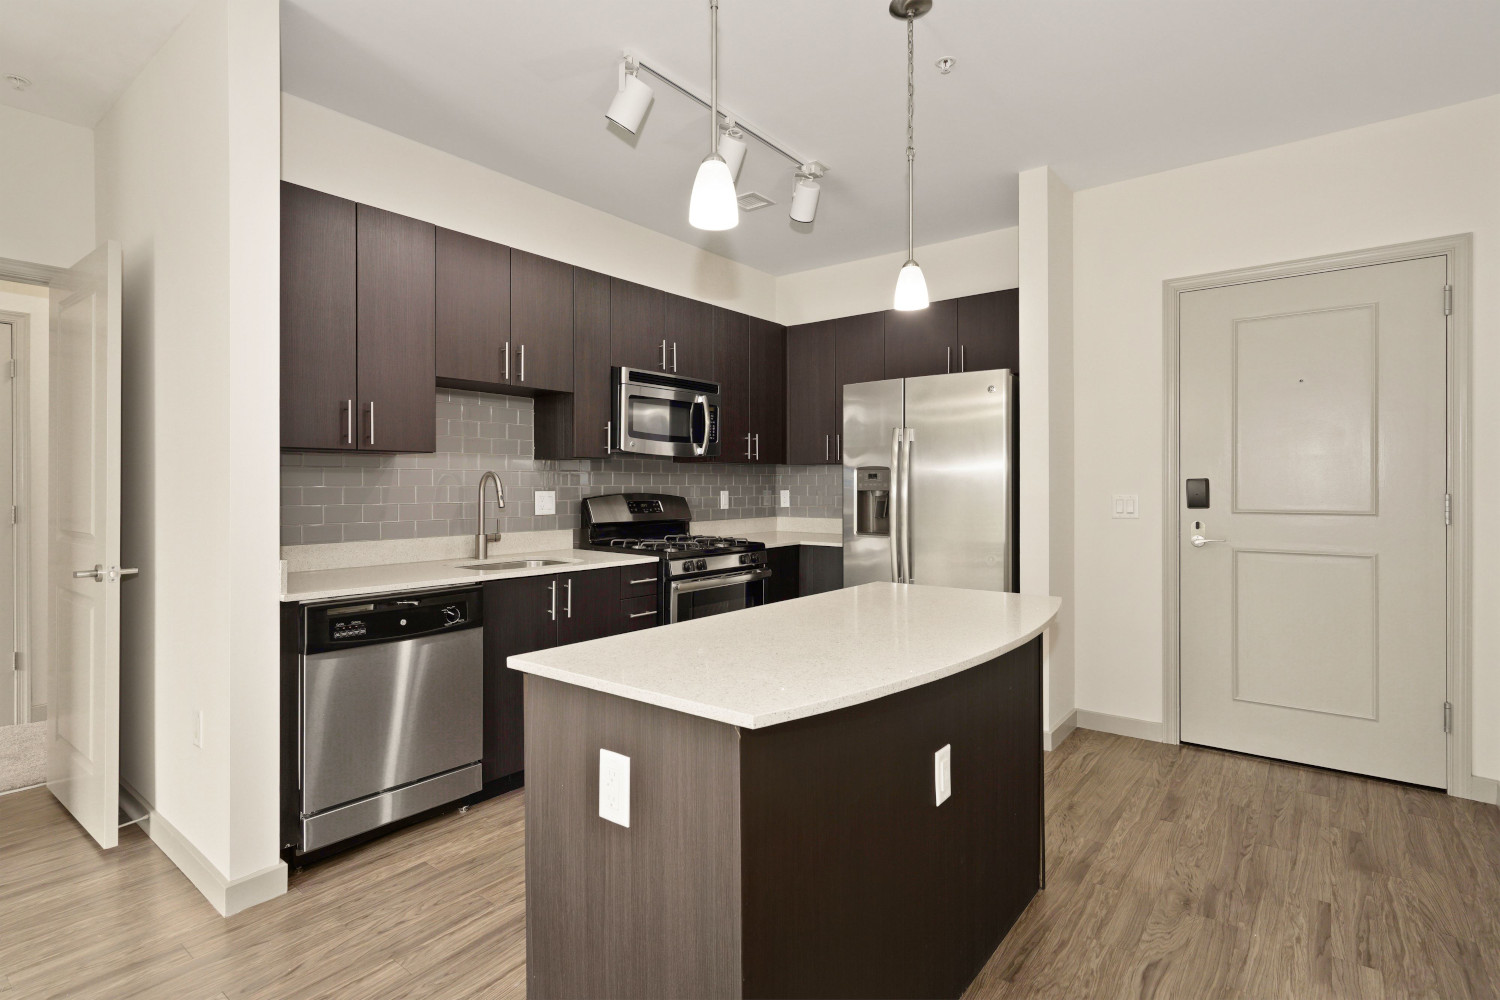 7001 Arlington at Bethesda : Kitchens with stainless steel appliances, ample cabinet storage, and modern tile backsplash